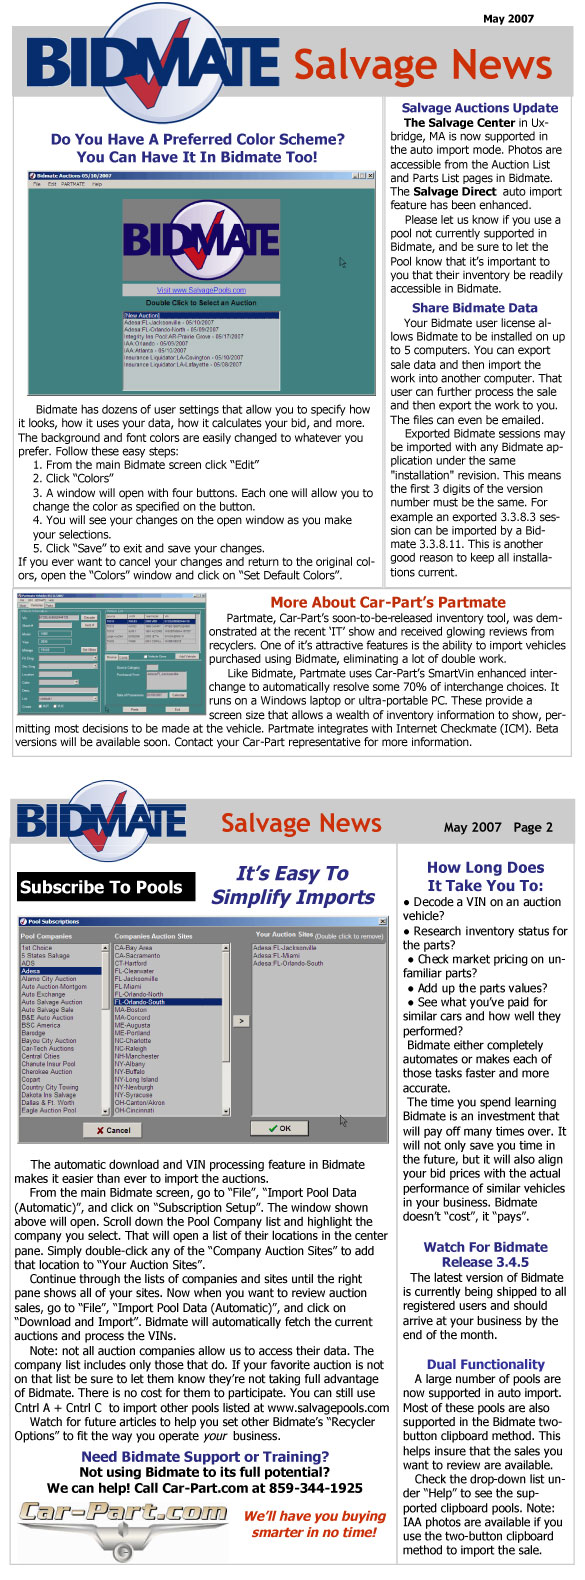 Bidmate Salvage News - May 2007